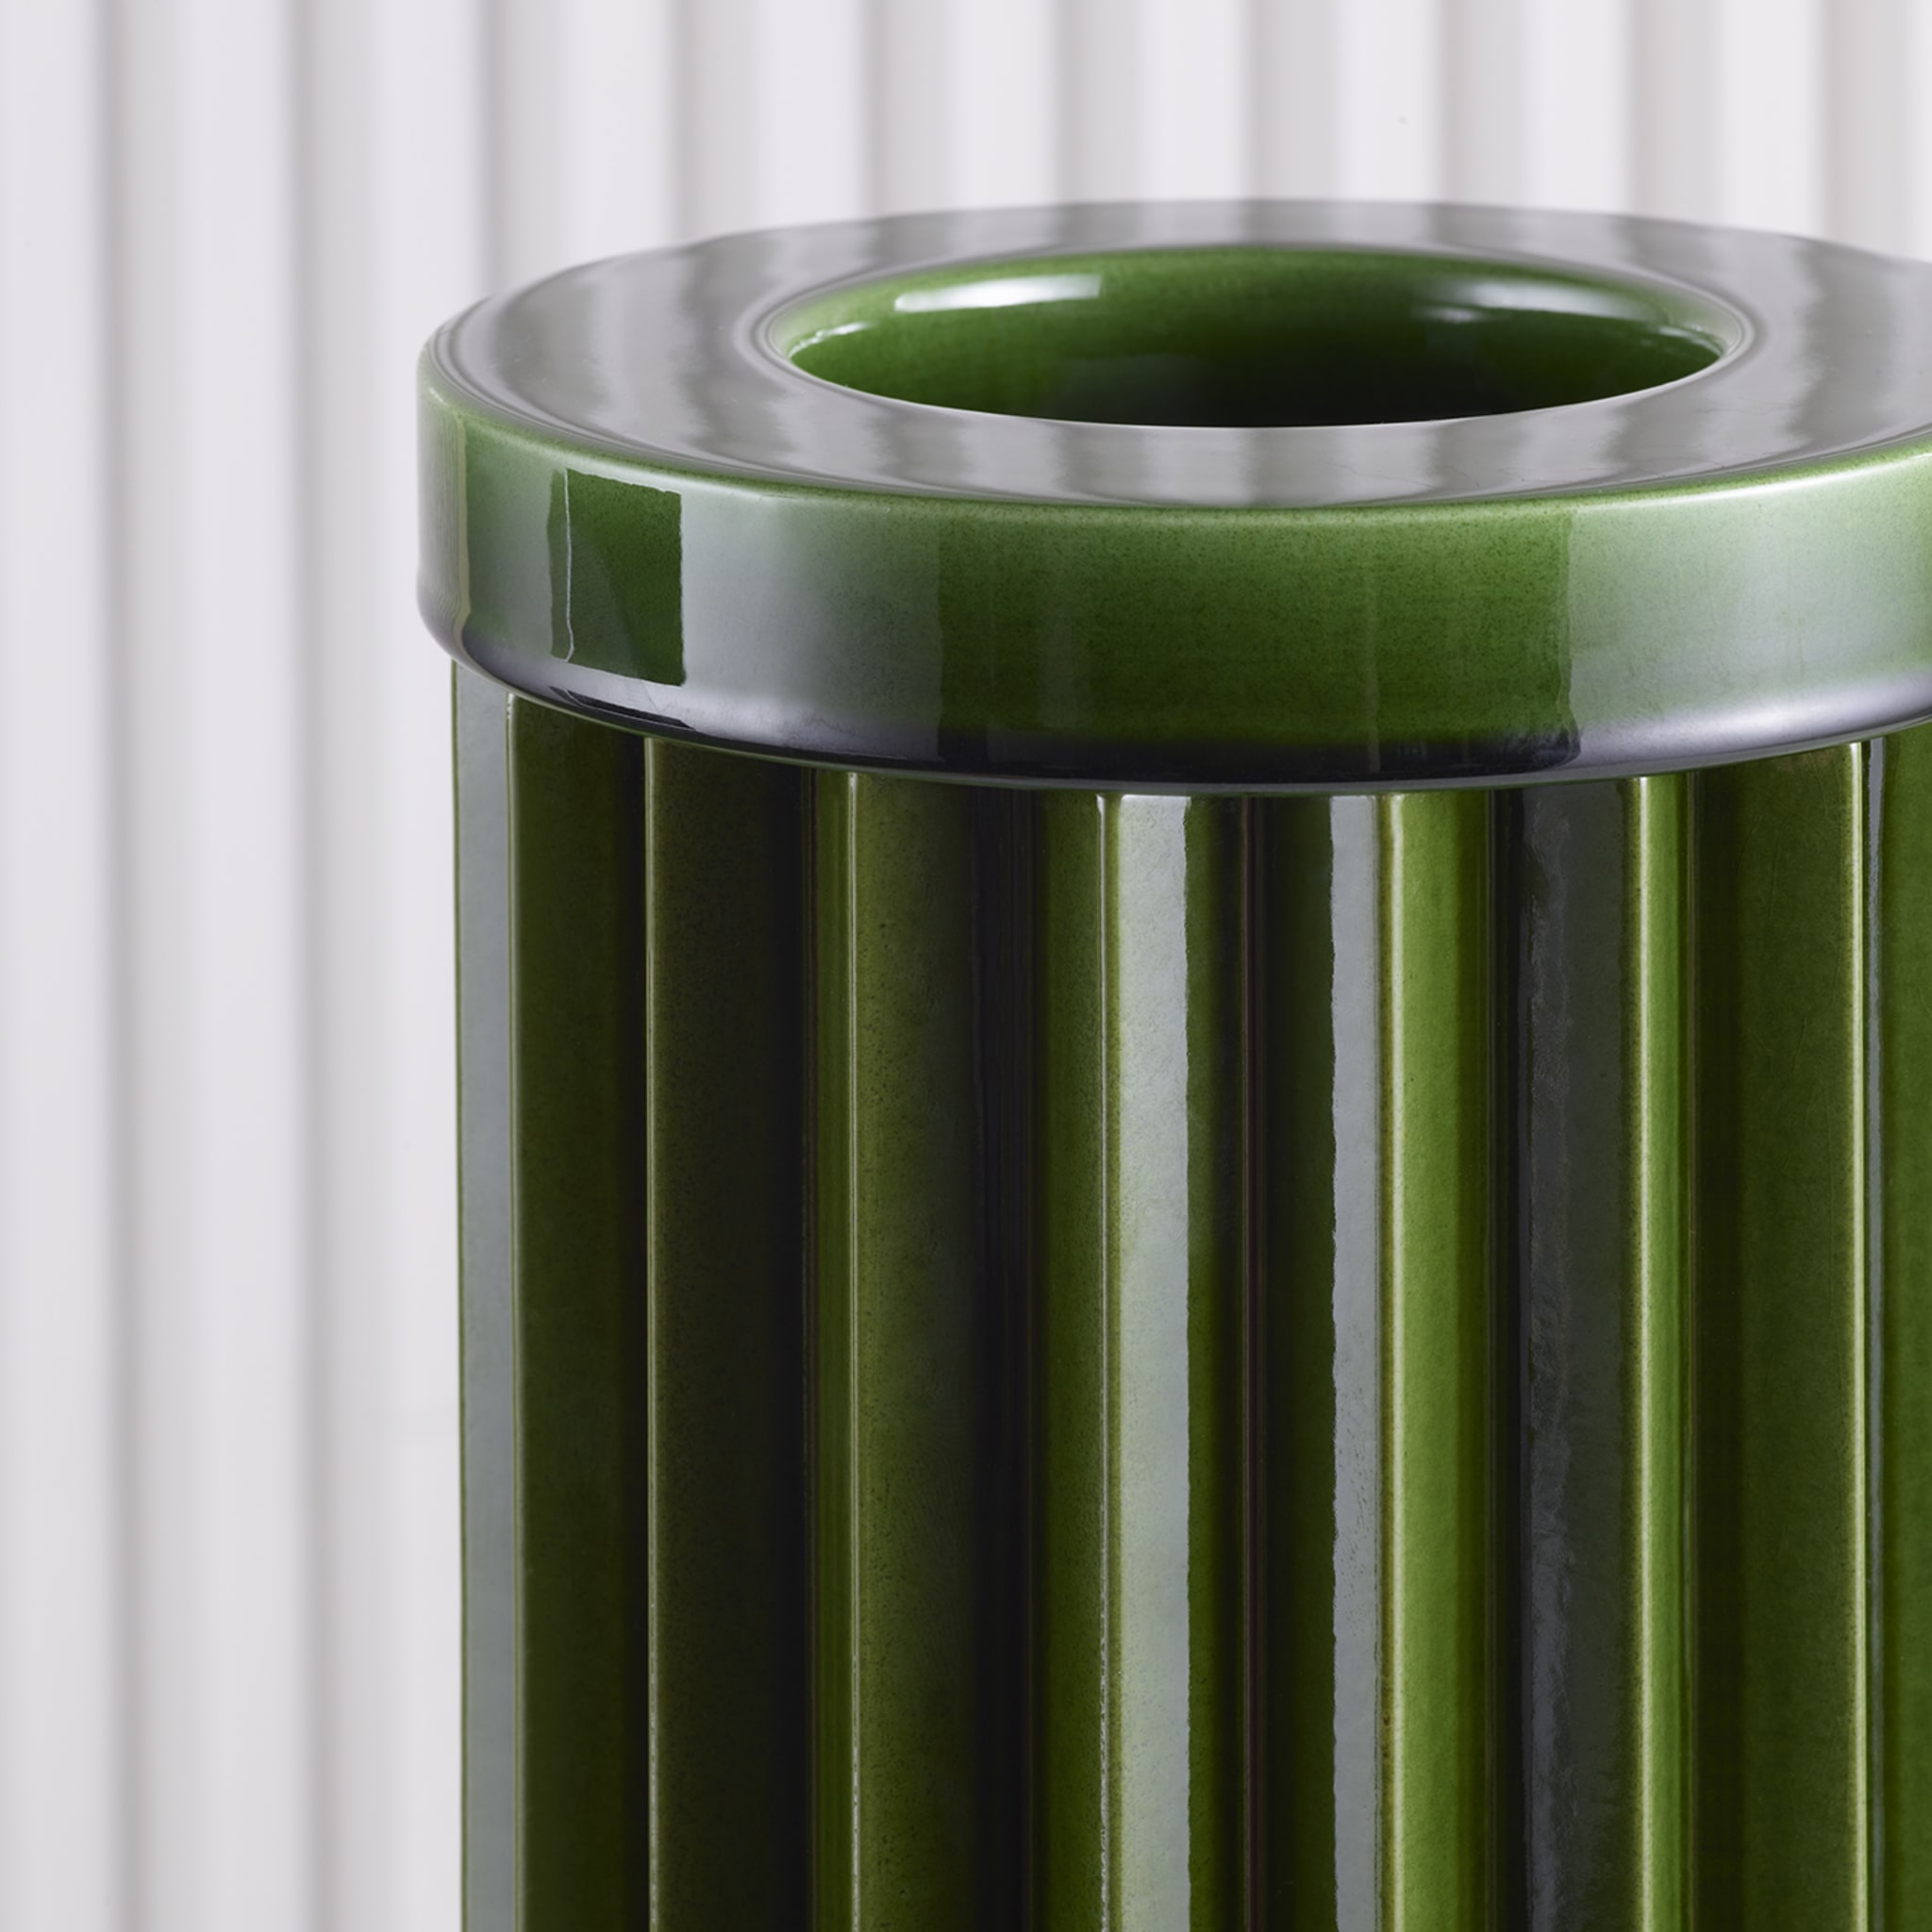 Rombini A Green Vase by Ronan & Erwan Bouroullec - Alternative view 2